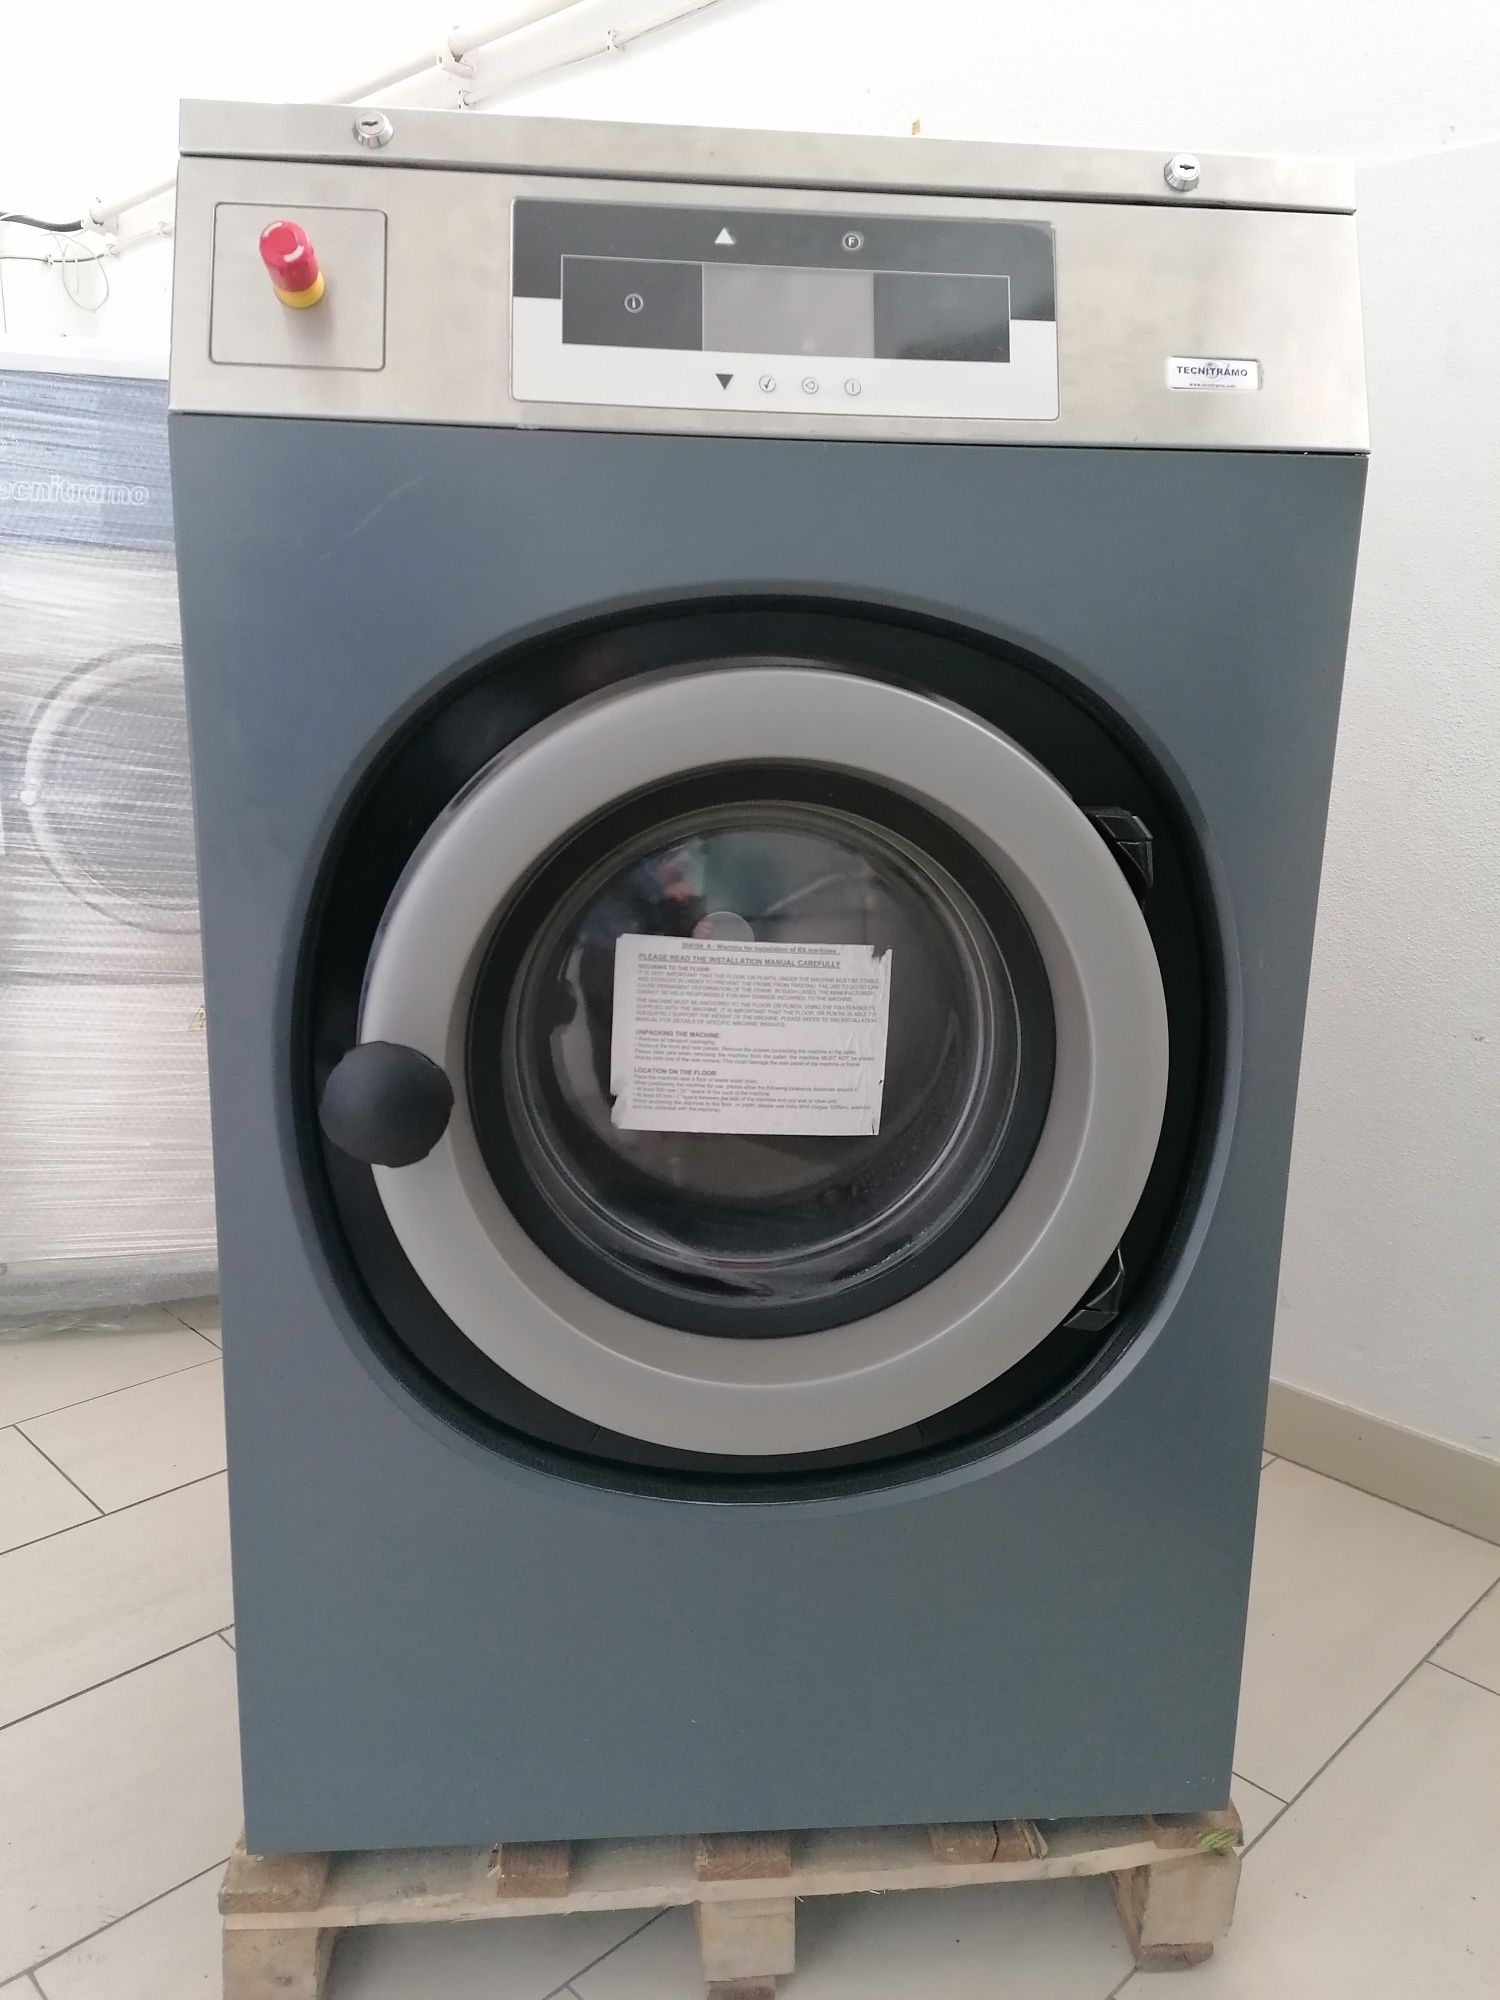 Self Service lavandaria Líder de mercado em Portugal